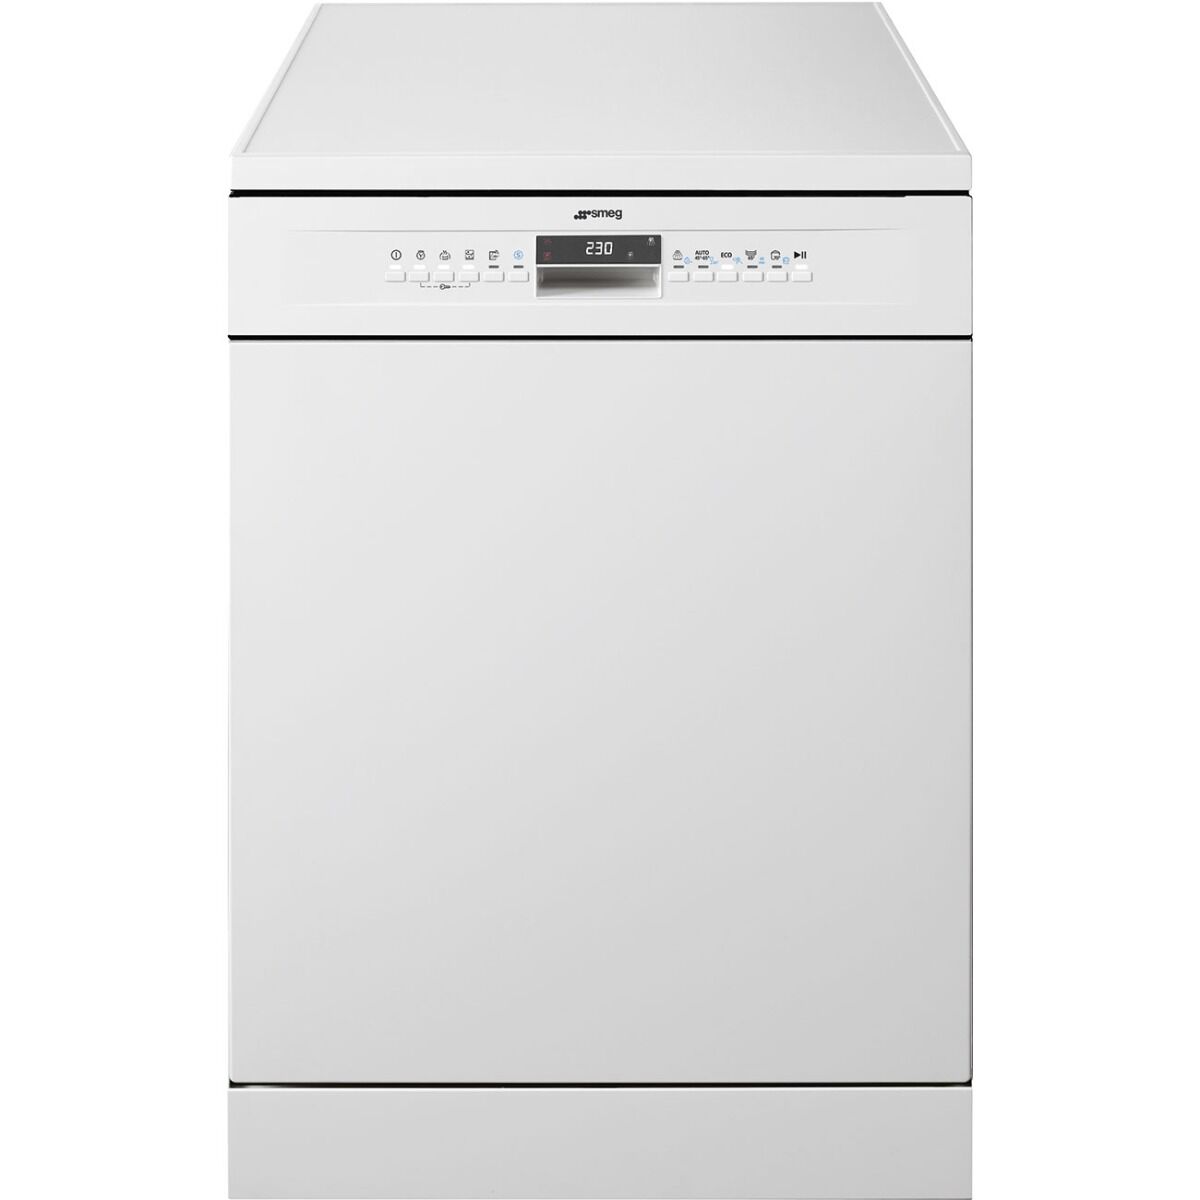 Smeg DF344BW 60cm White Freestanding Dishwasher - White